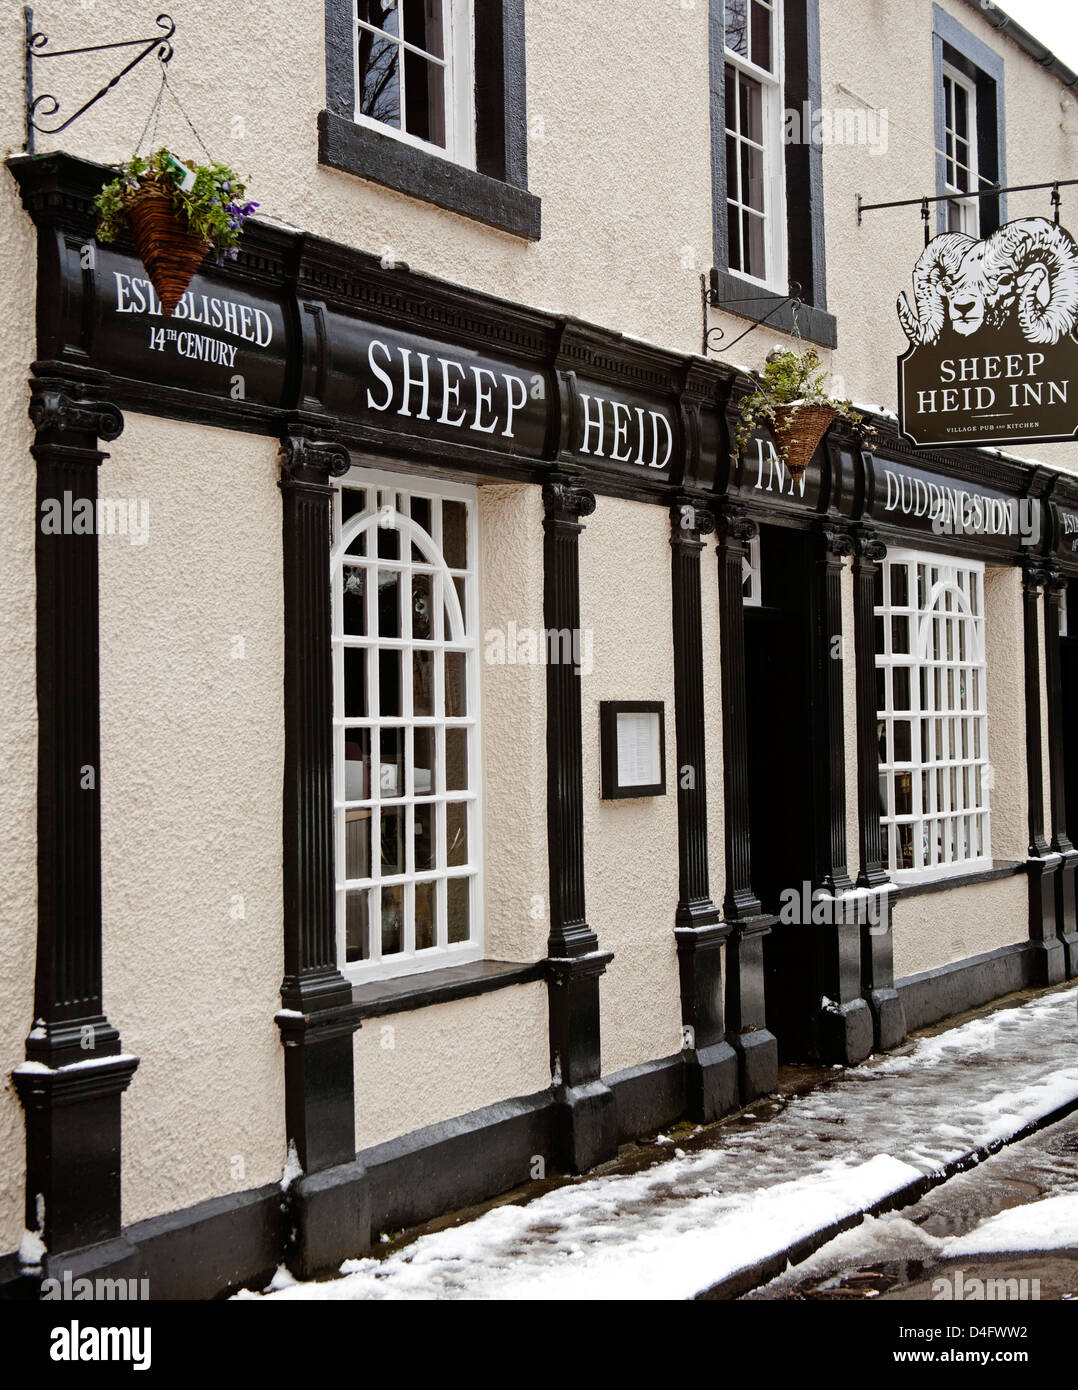 Sheep Heid Inn, Duddingston Village, Edinburgh, Scotland UK, Europe 2013 Stock Photo